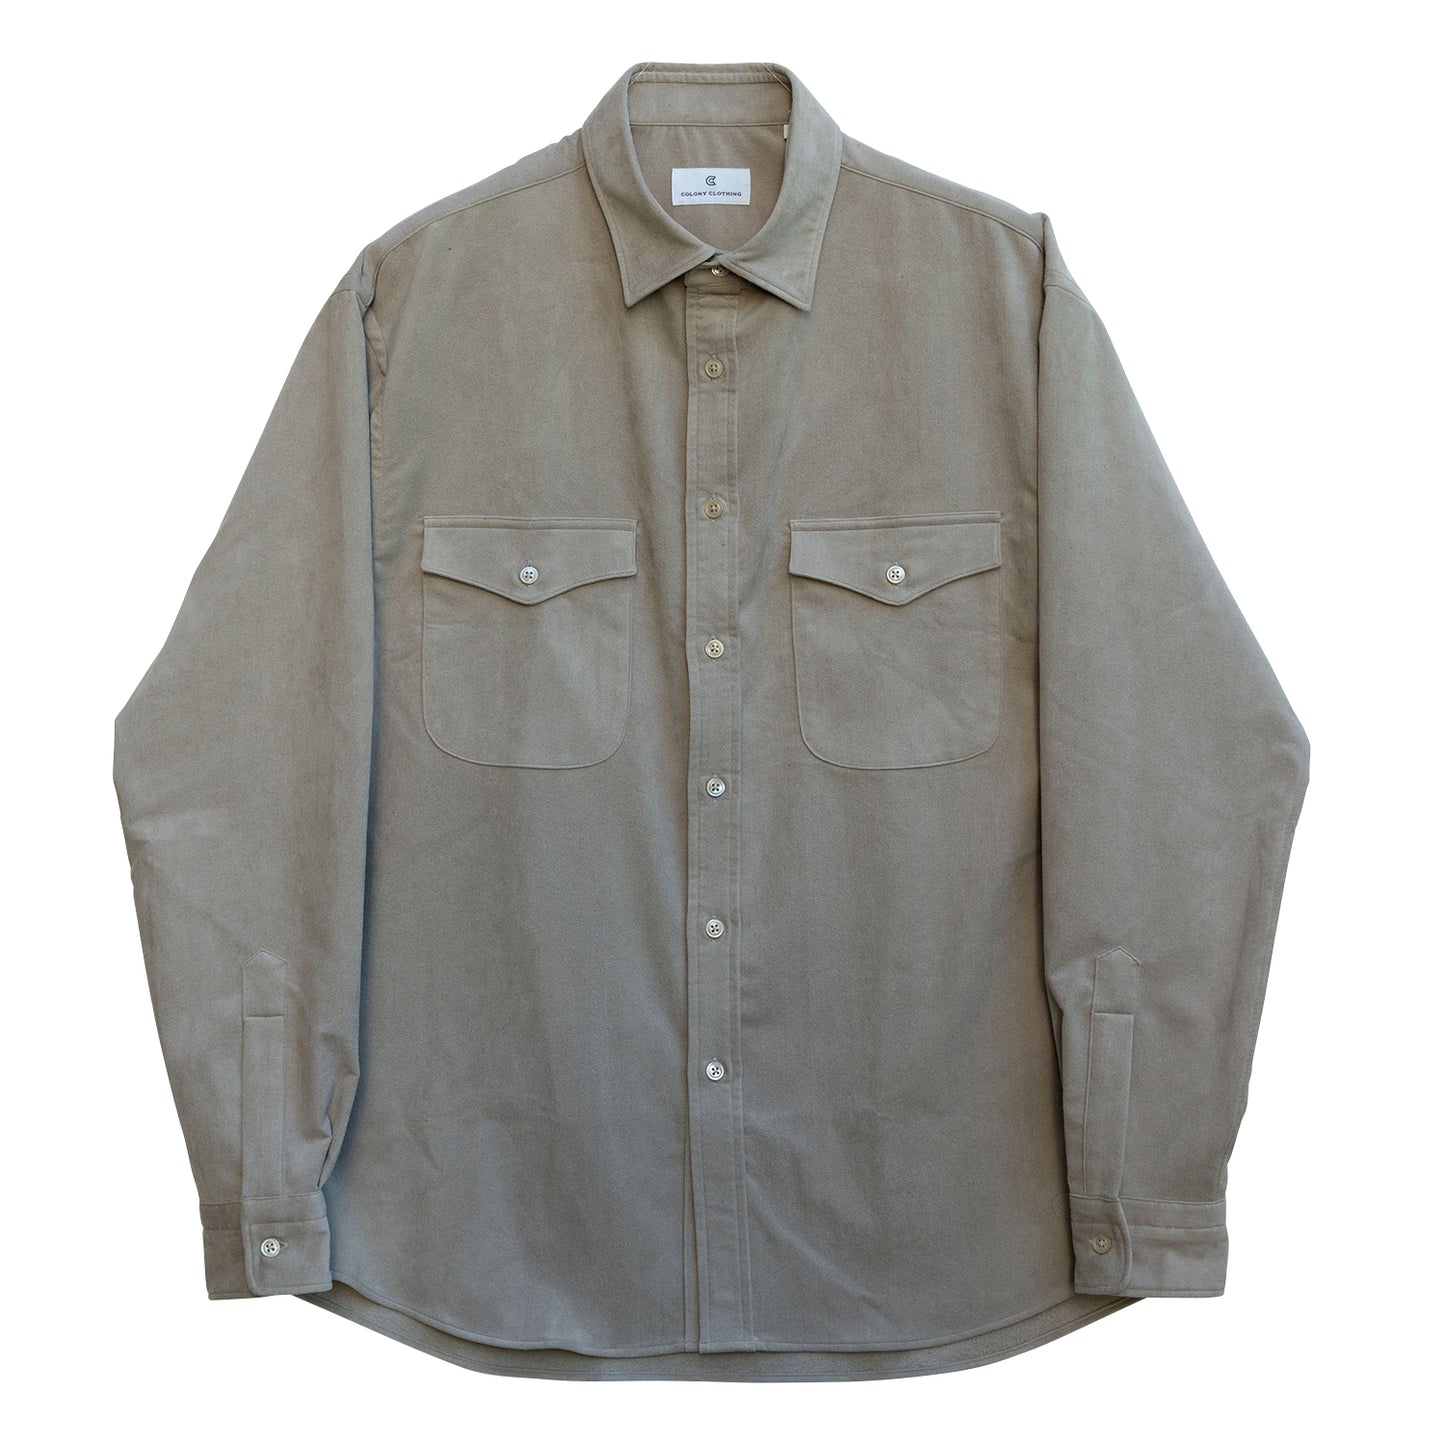 COLONY CLOTHING / Ultrasuede® ダブルポケットシャツ / CC2302-SH04